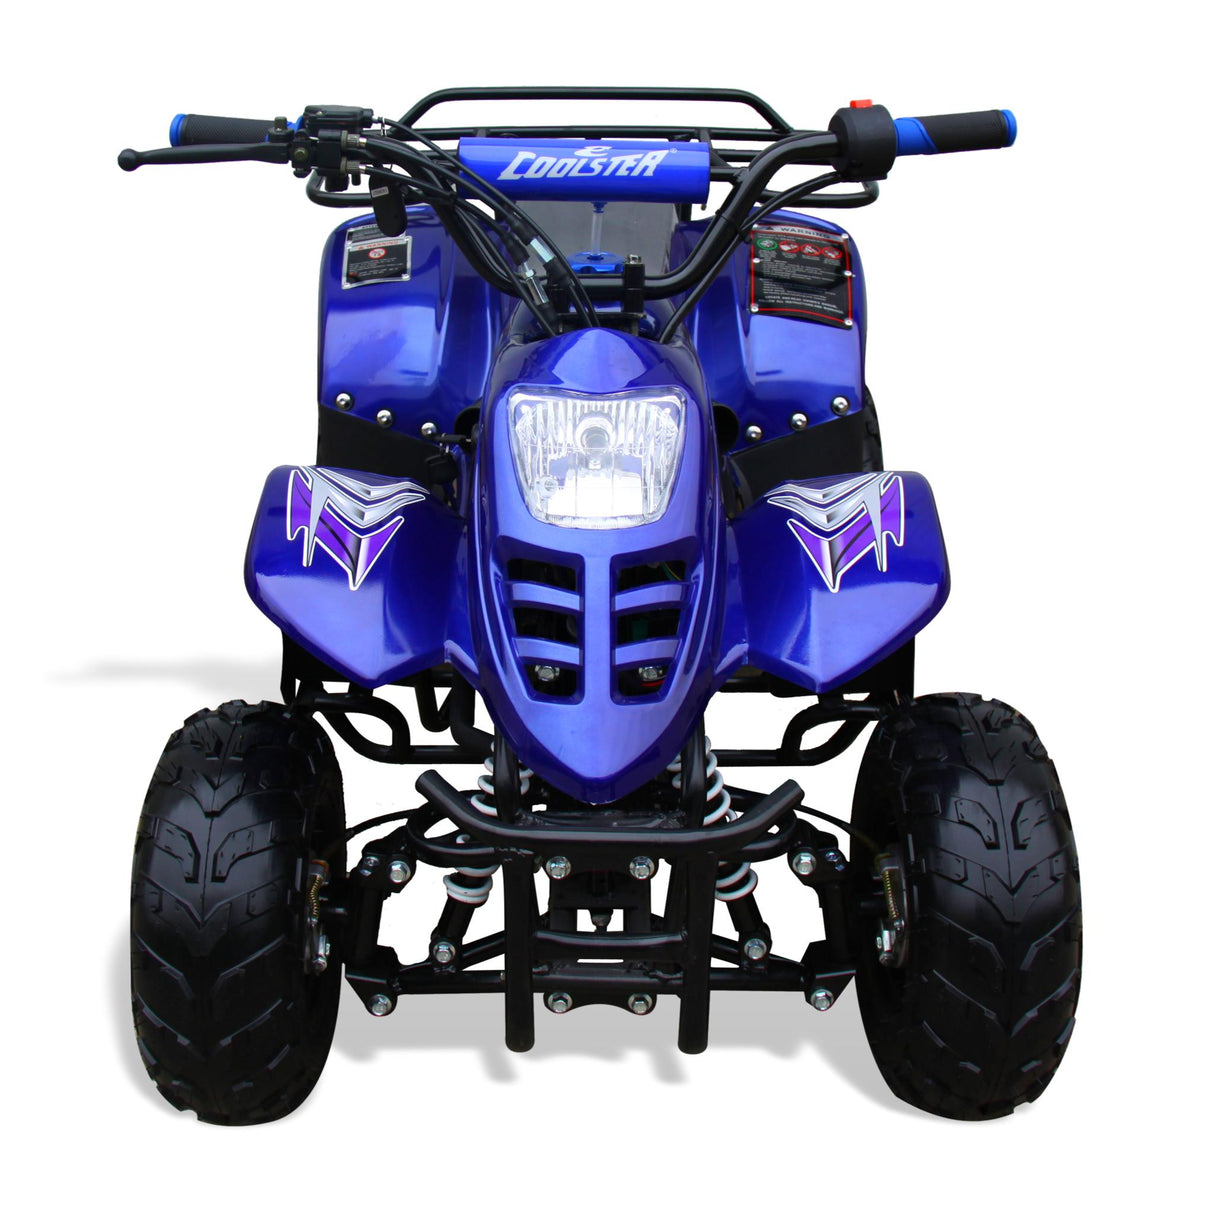 Coolster 110cc Kids ATV - TribalMotorsports